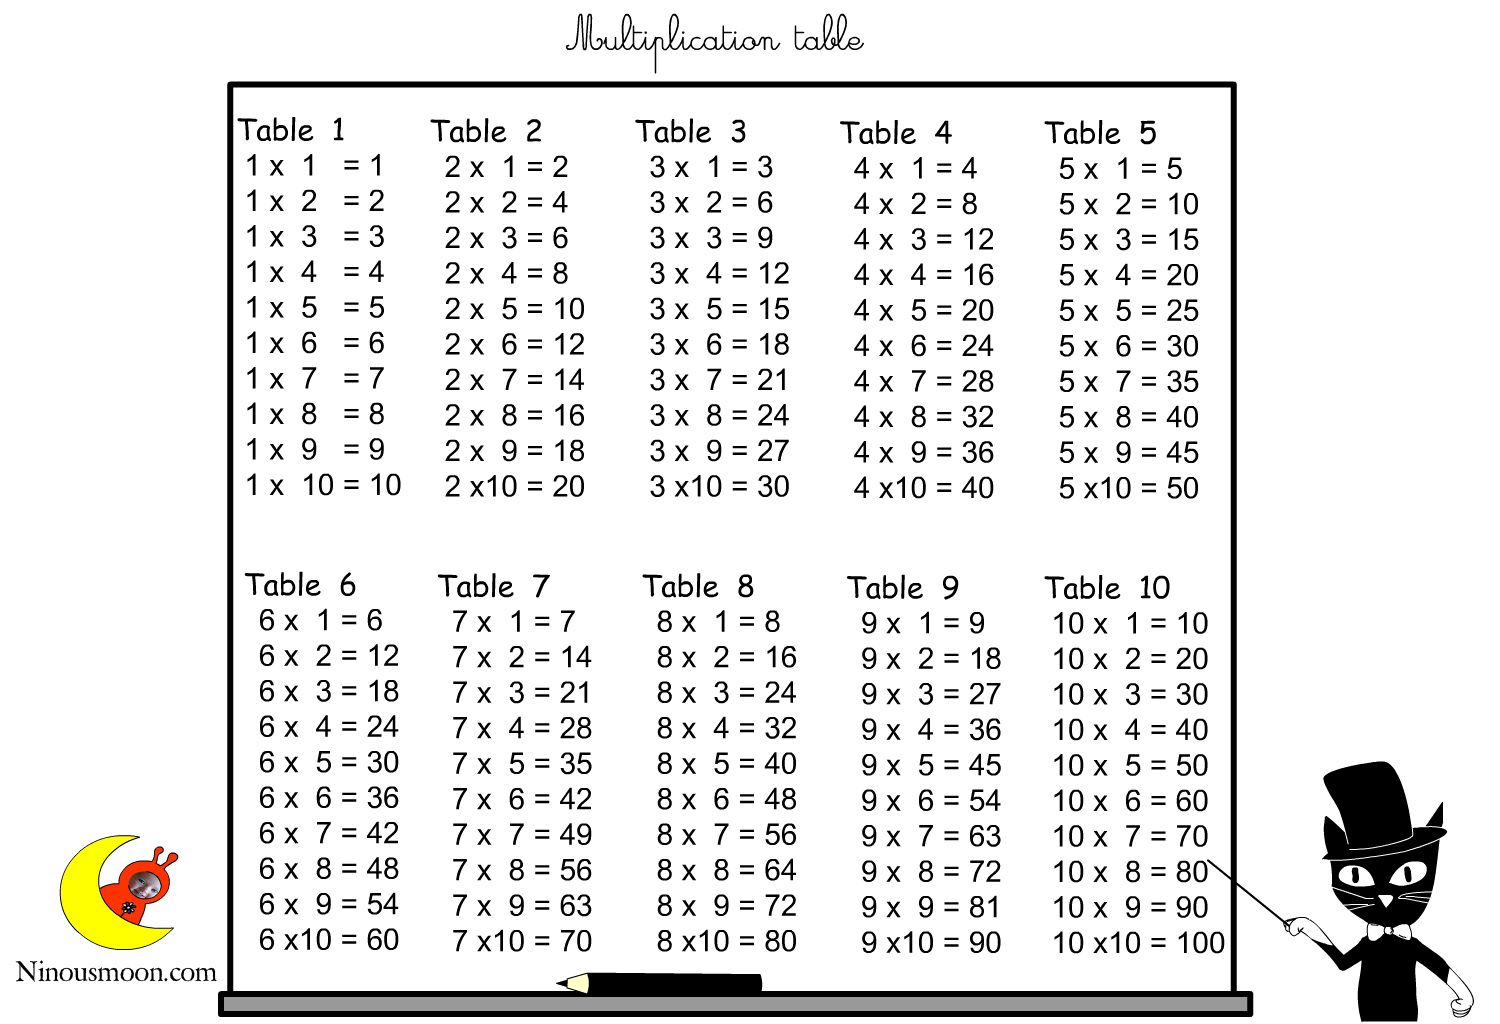 print a multiplication chart